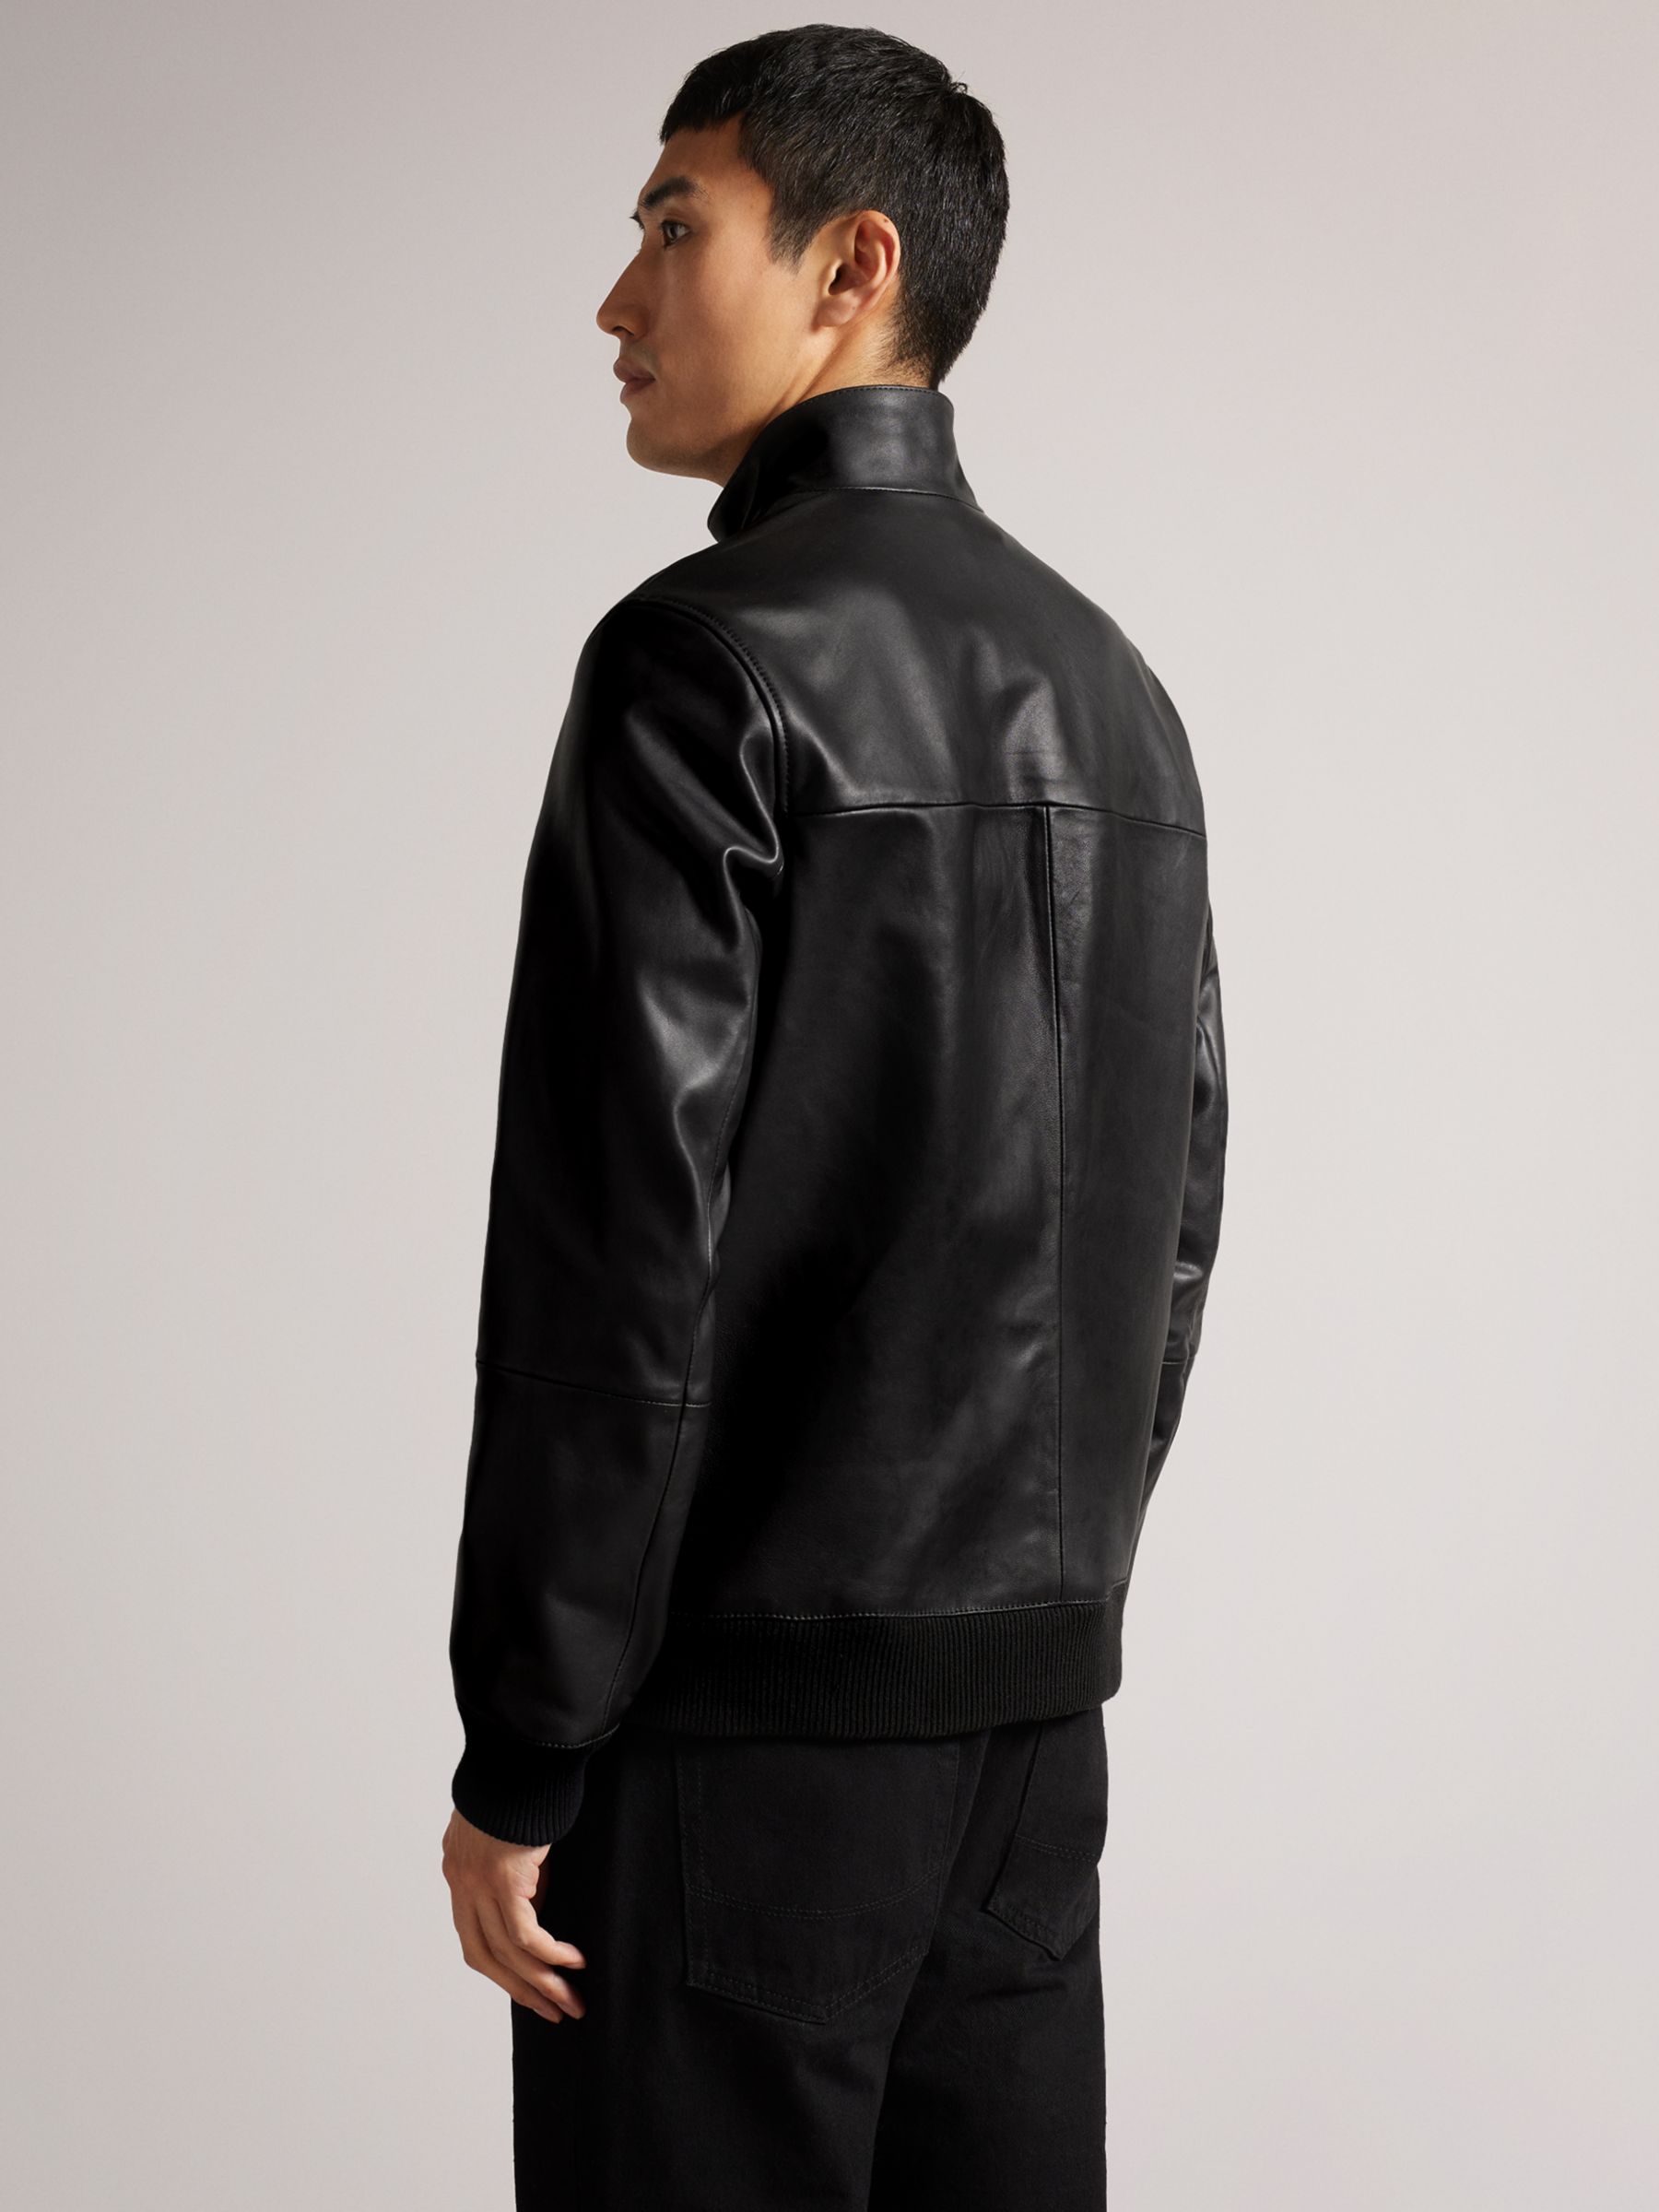 Ted Baker Leadon Leather Jacket, Black, S